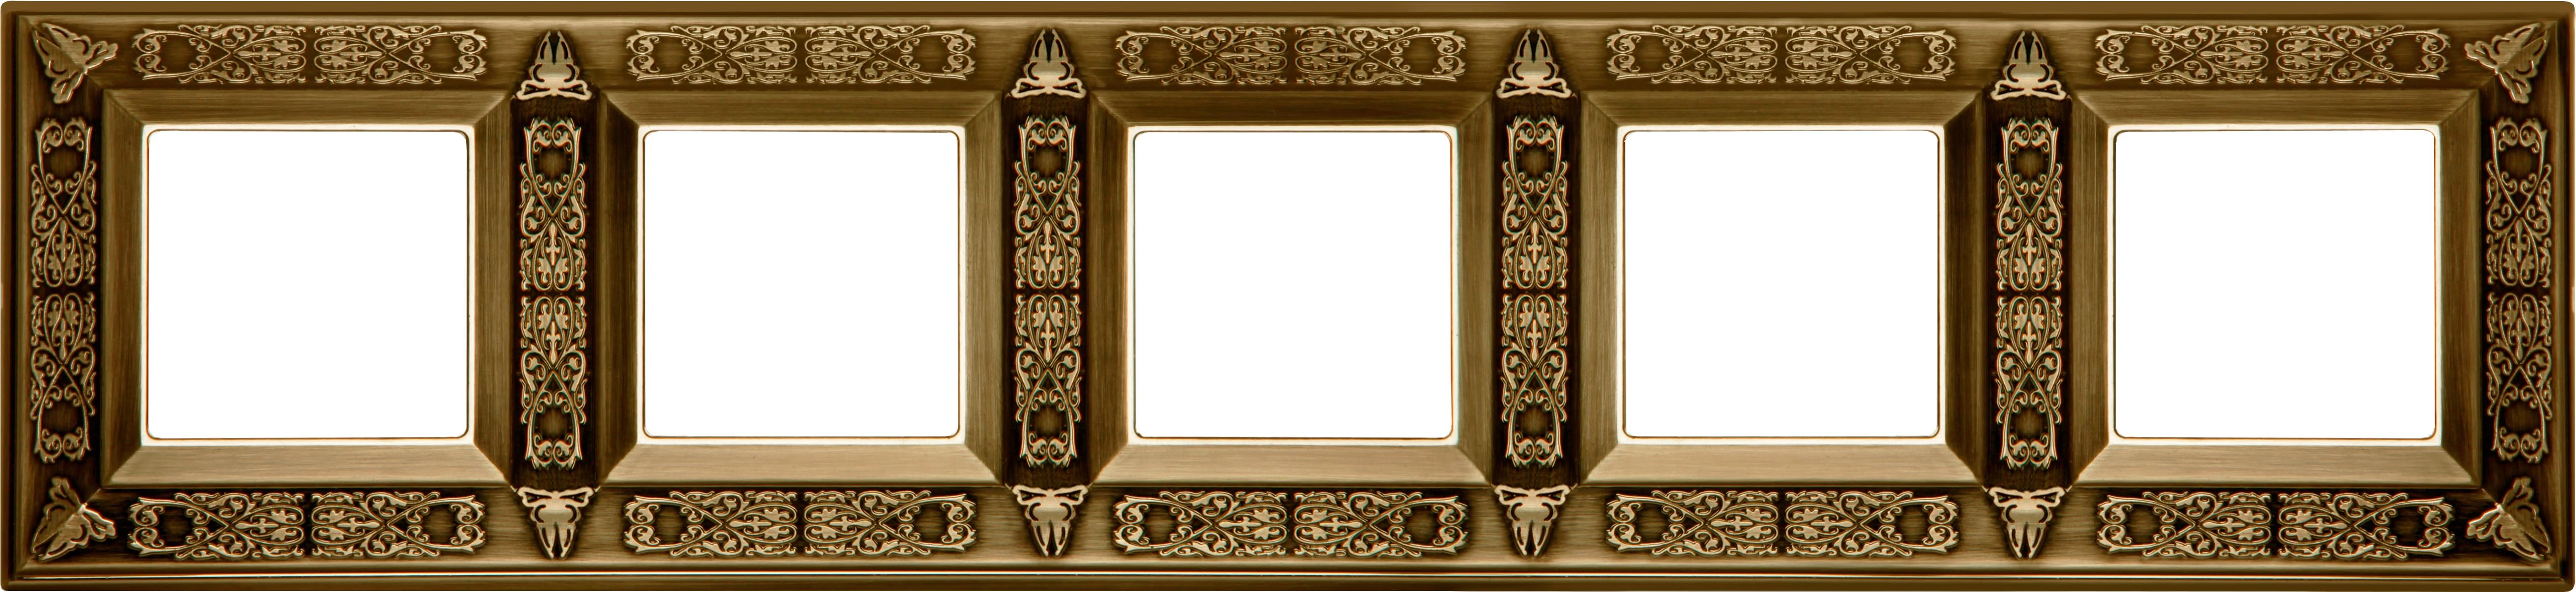  артикул FD01415PB название Рамка 5-ая (пятерная), цвет Светлая бронза, Granada, Fede